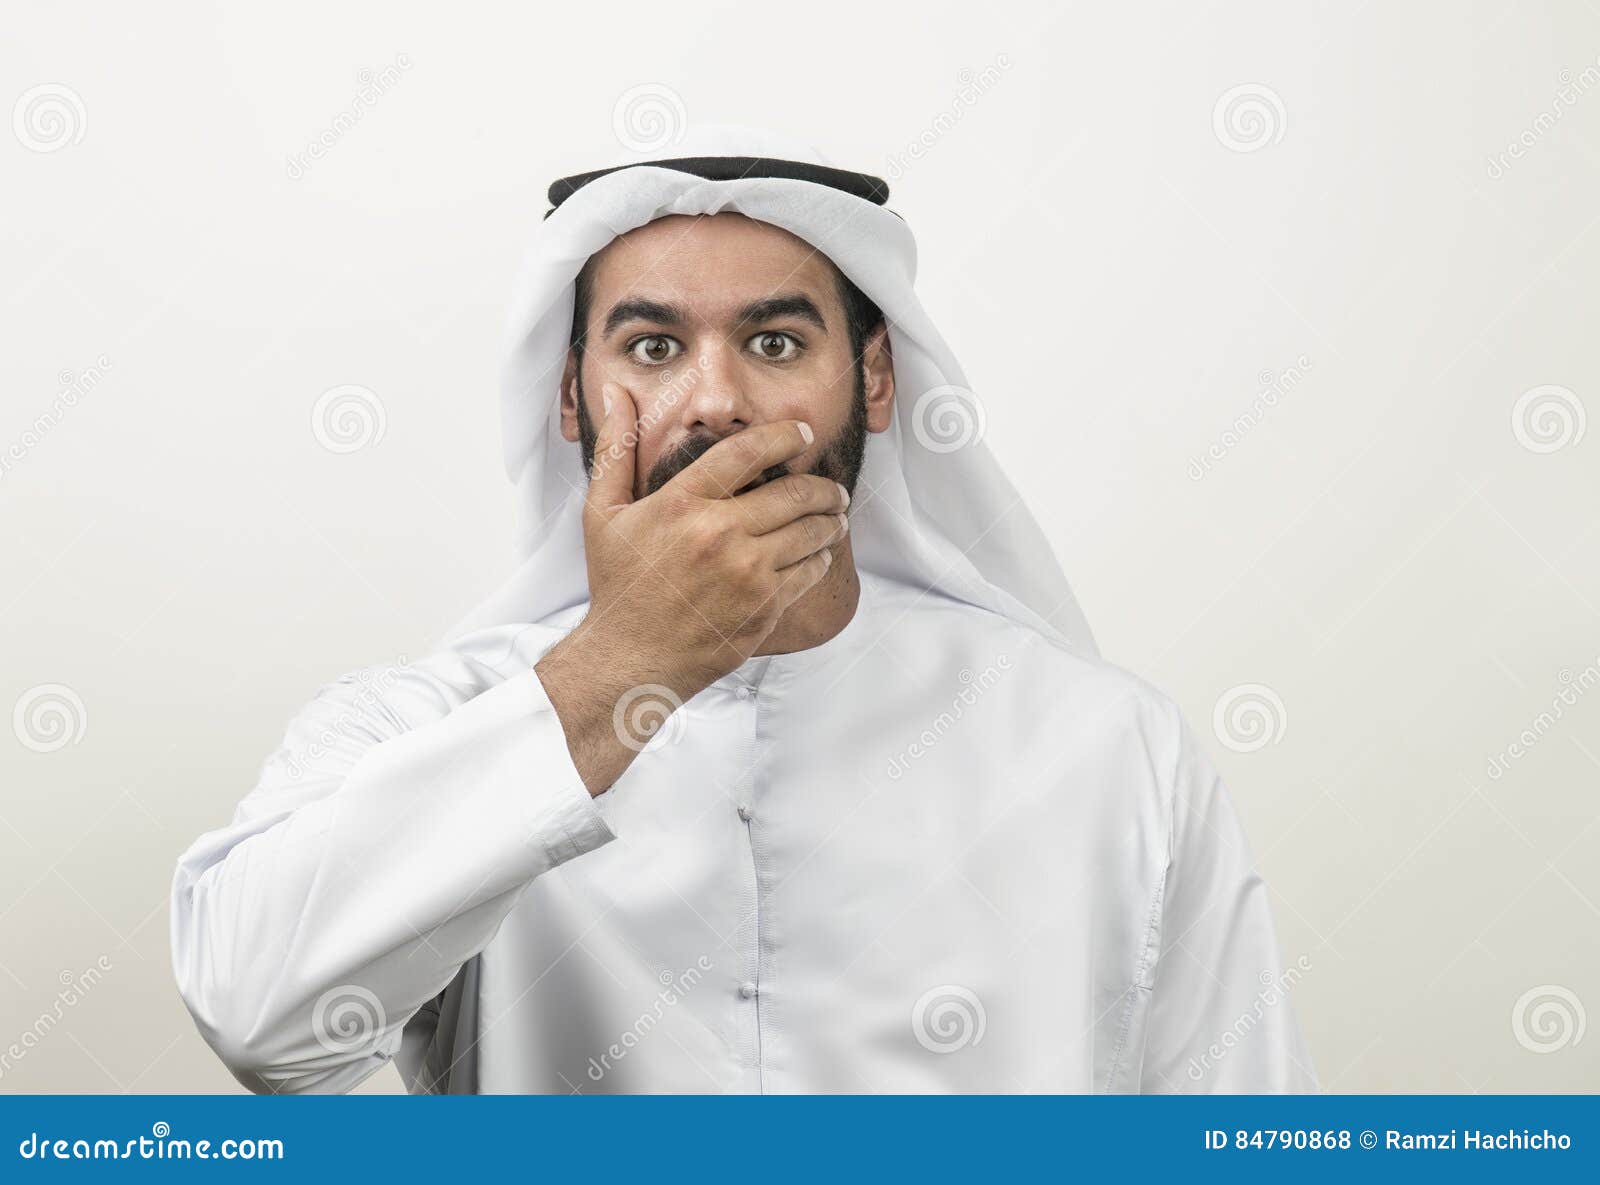 portrait-shocked-arabian-man-covering-his-mouth-arabian-g-guy-84790868.jpg